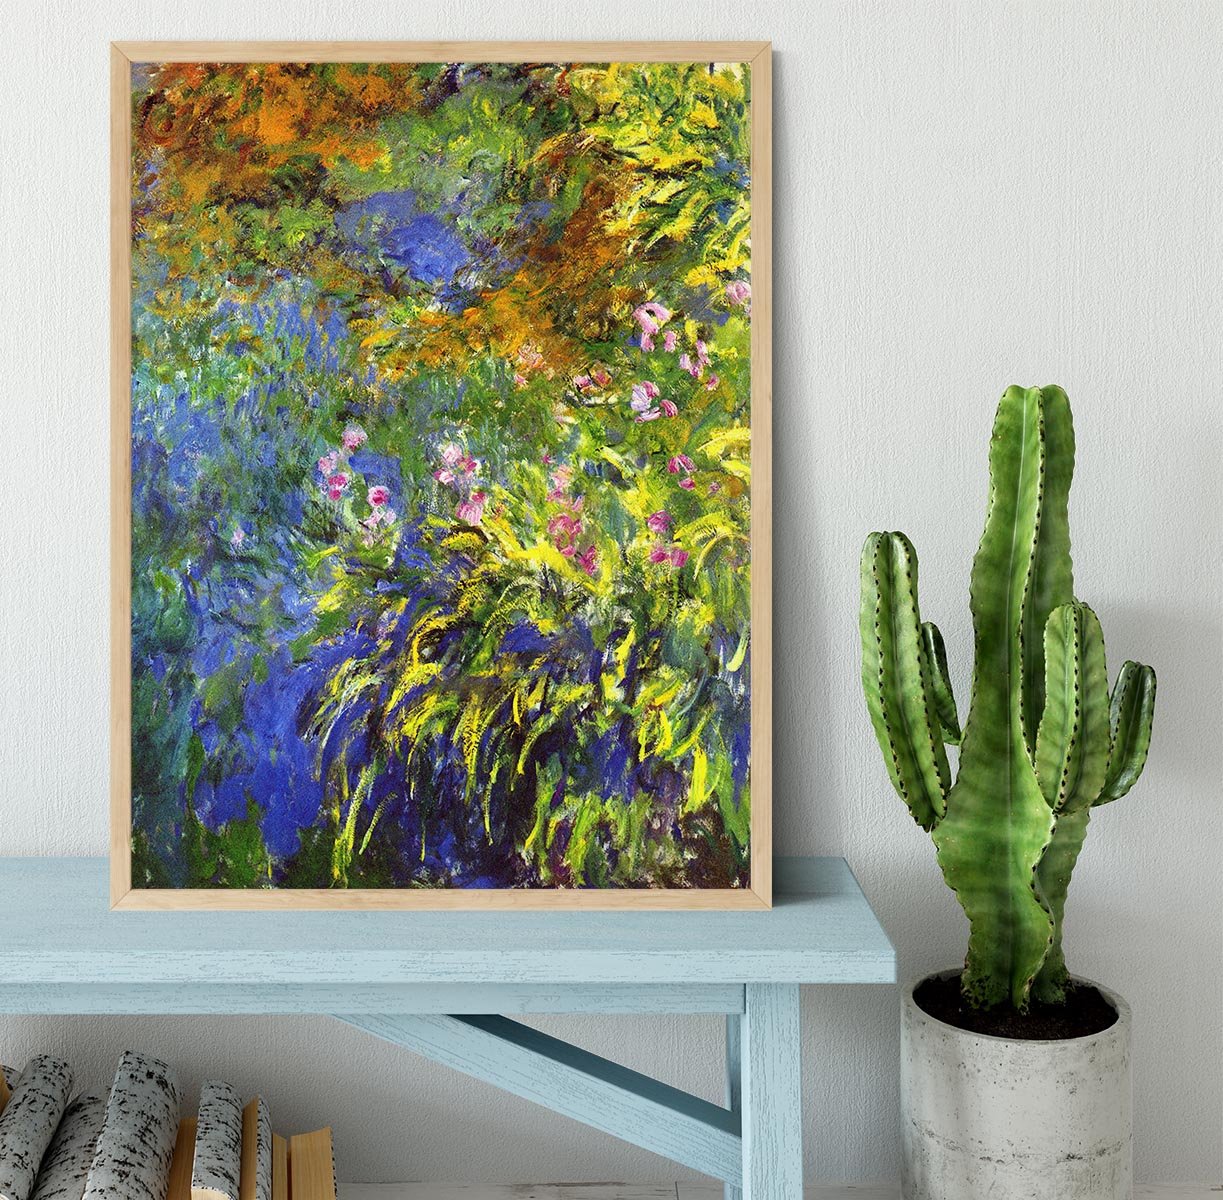 Iris at the sea rose pond 2 by Monet Framed Print - Canvas Art Rocks - 4